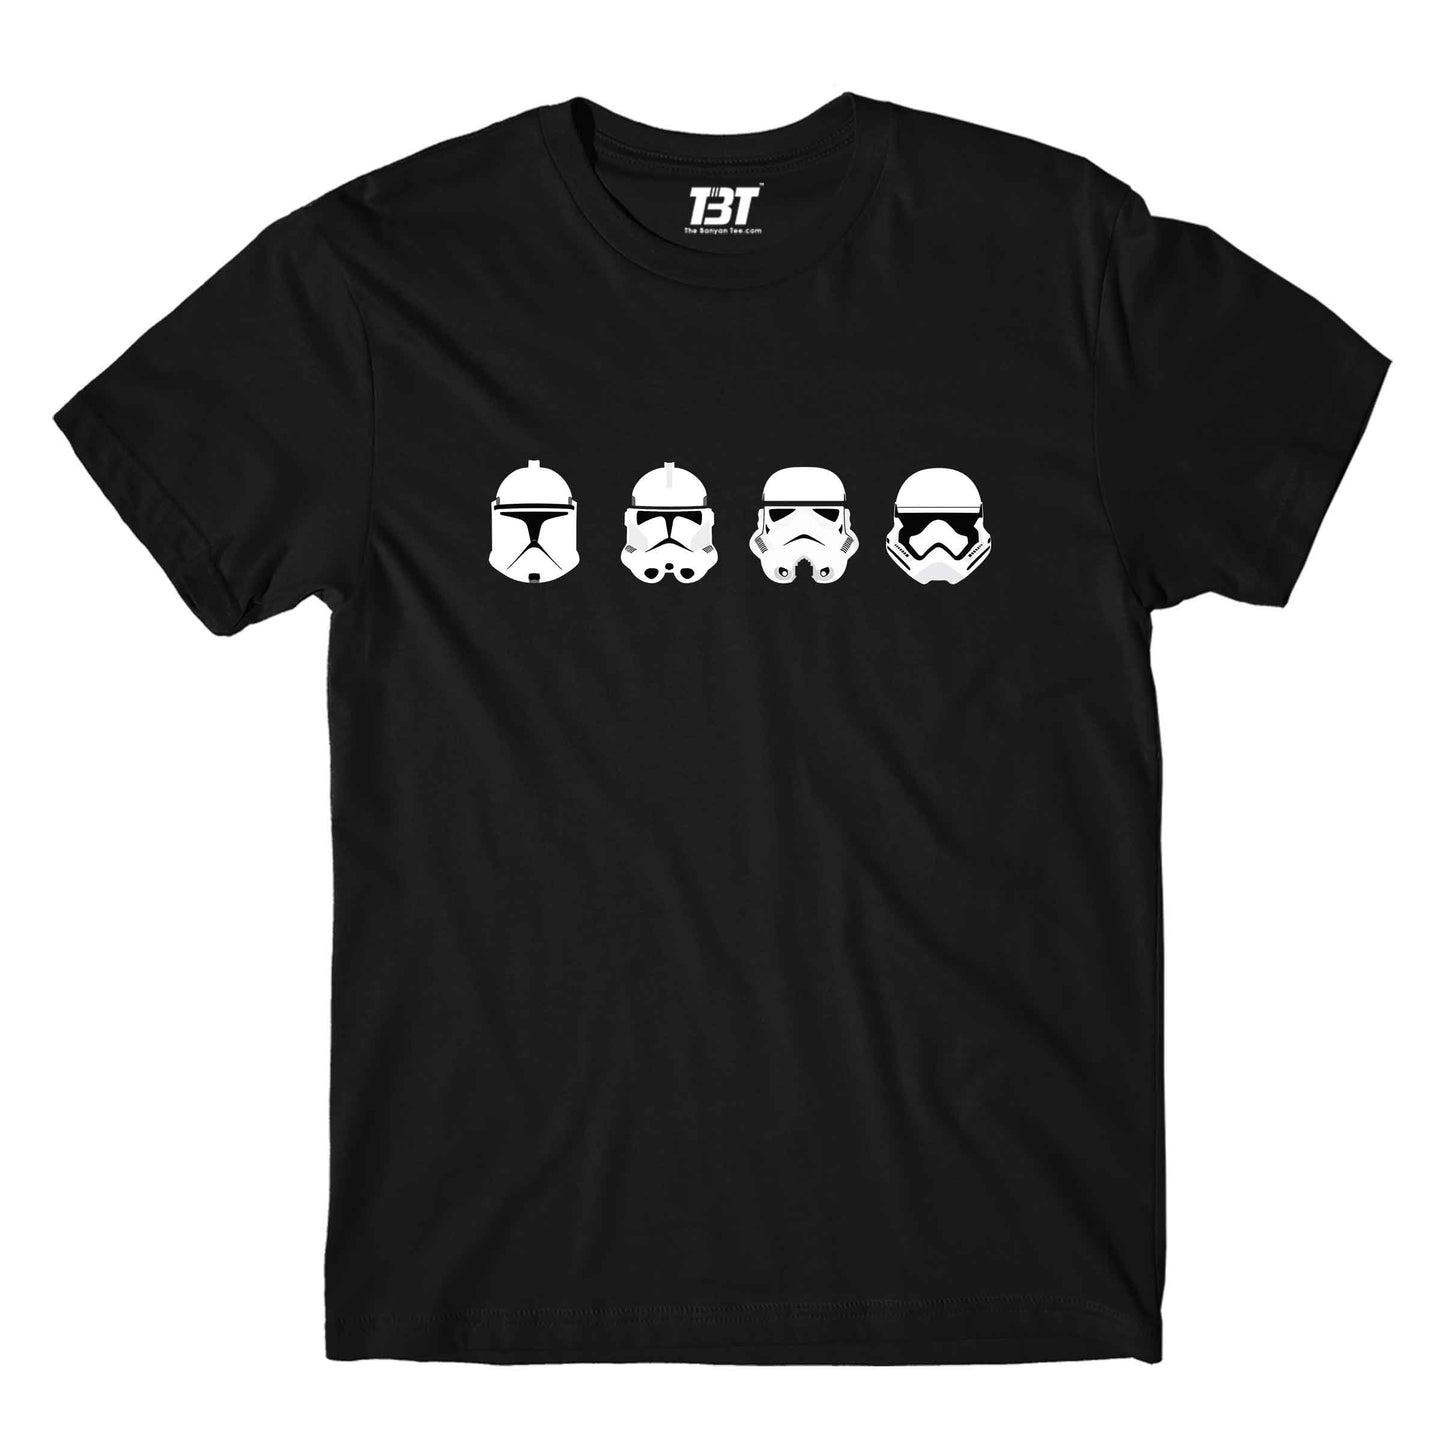 Star Wars T-shirt by The Banyan Tee TBT